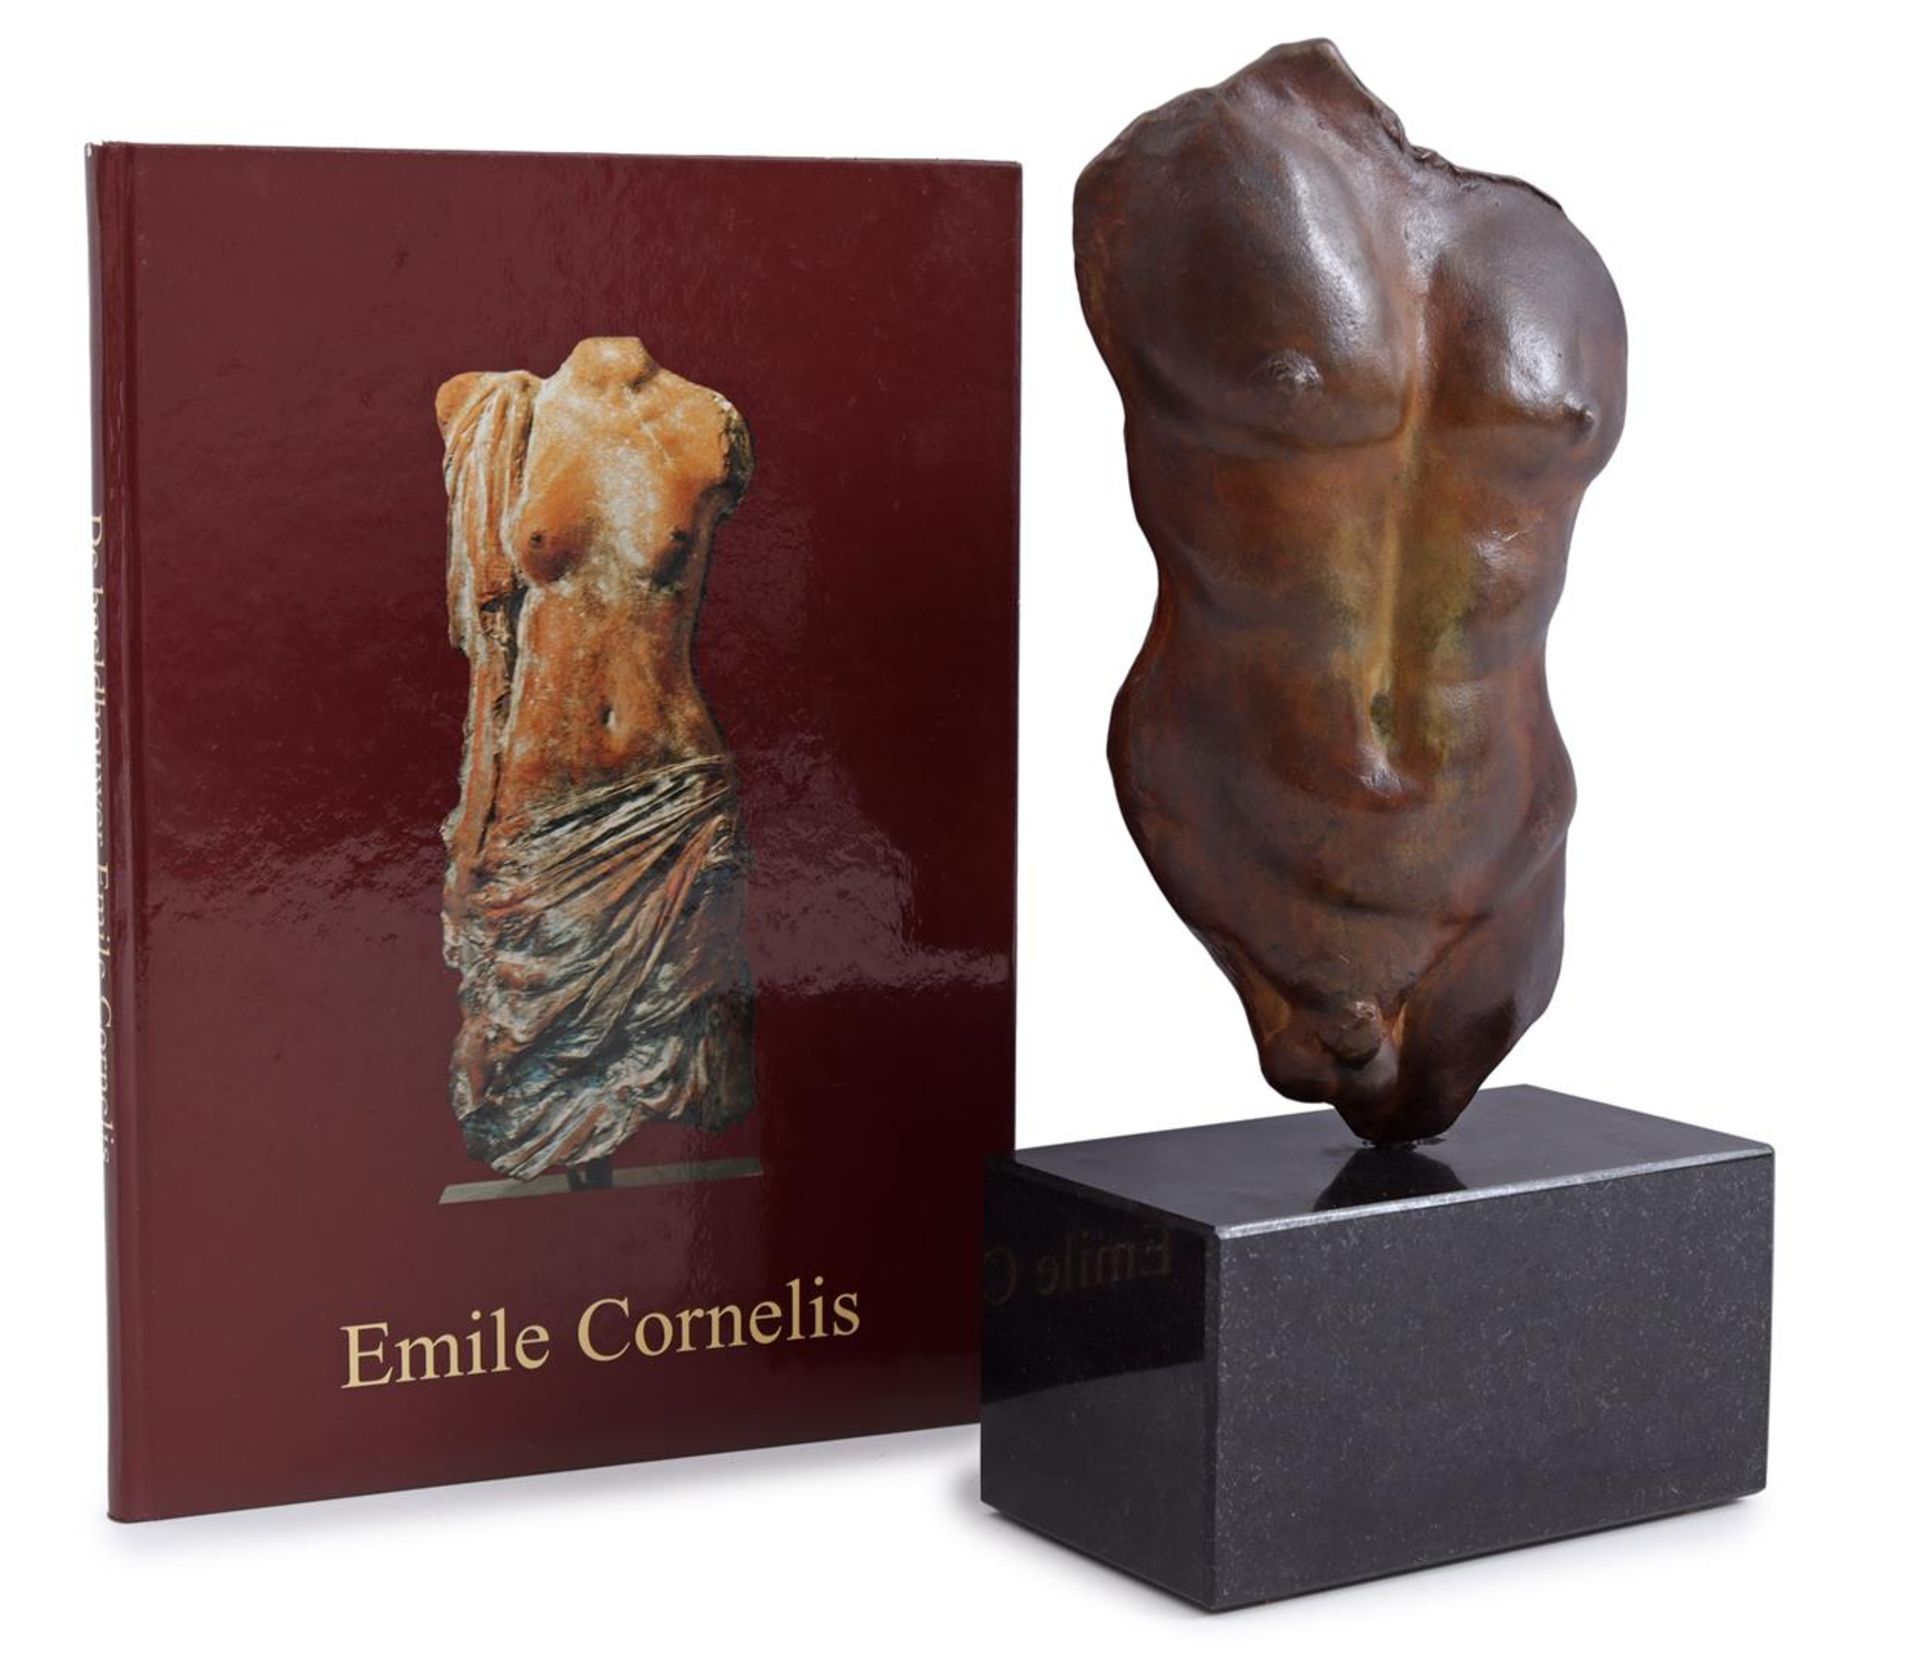 Emile Cornelis